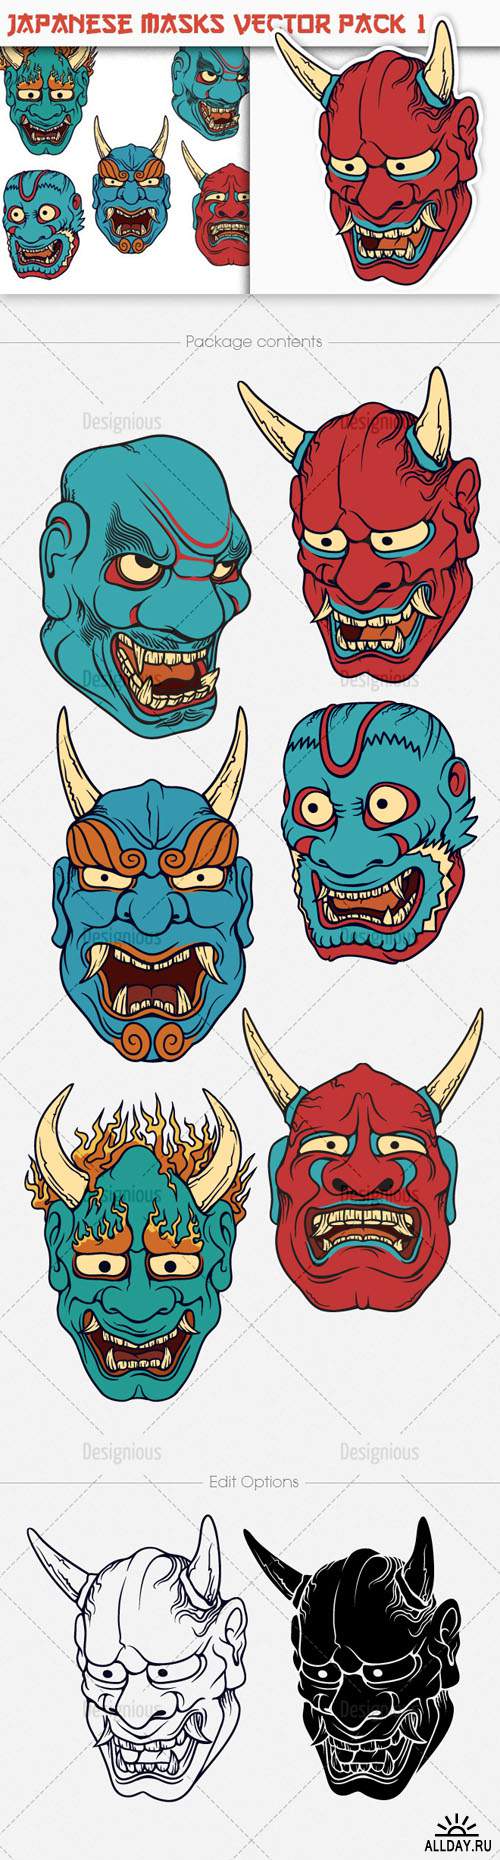 Japanese Masks Photoshop Vector Pack 1